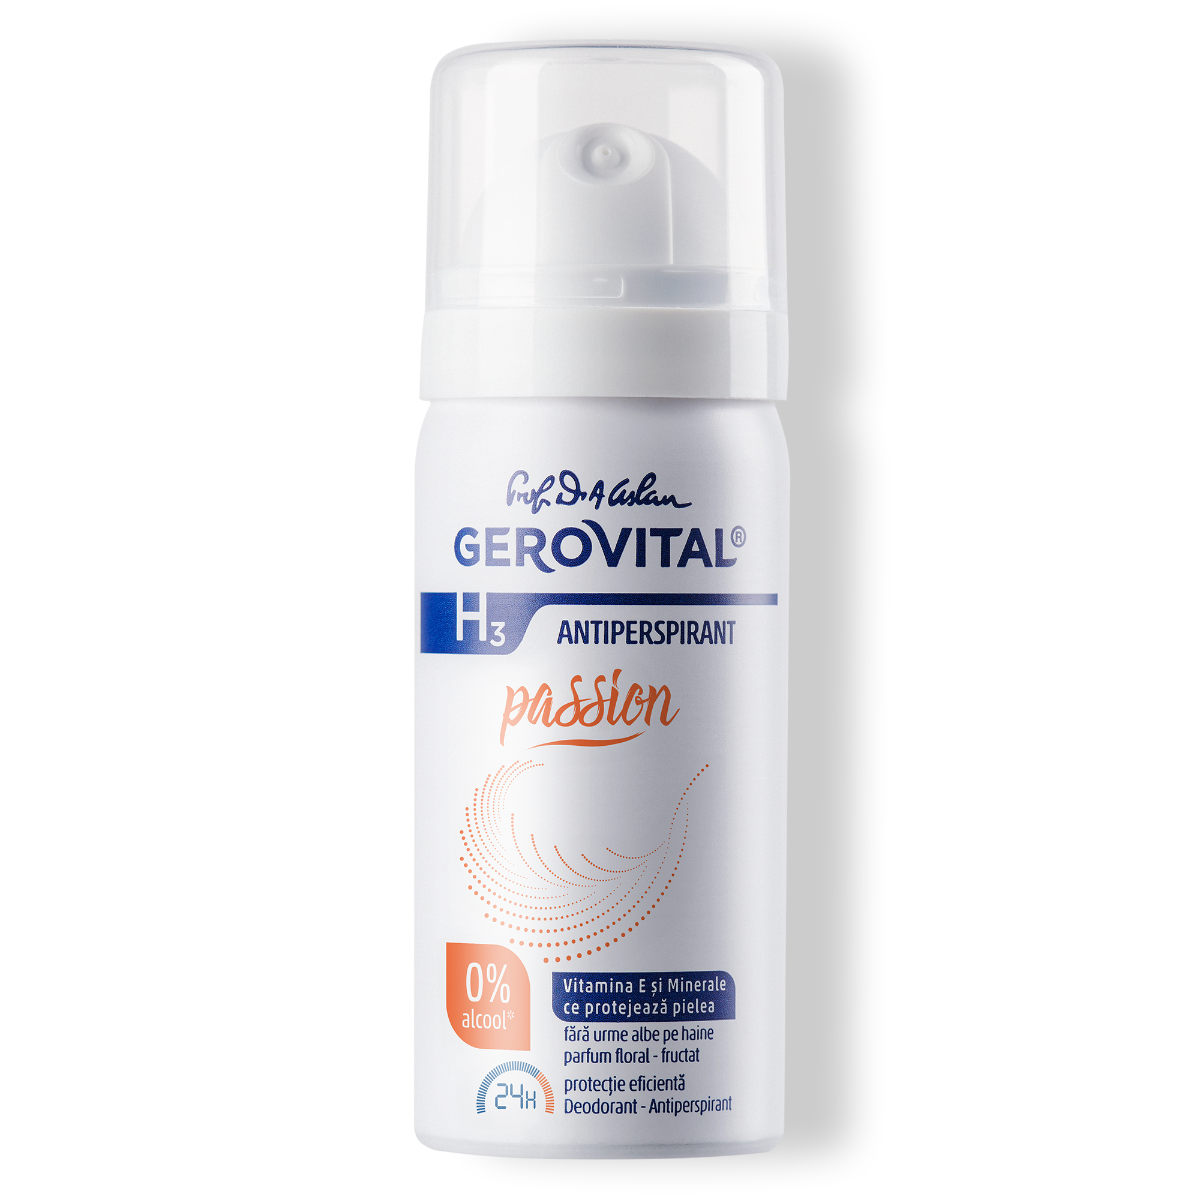 Deodorant Antiperspirant Gerovital H3 – Passion 40 Ml Antiperspirant